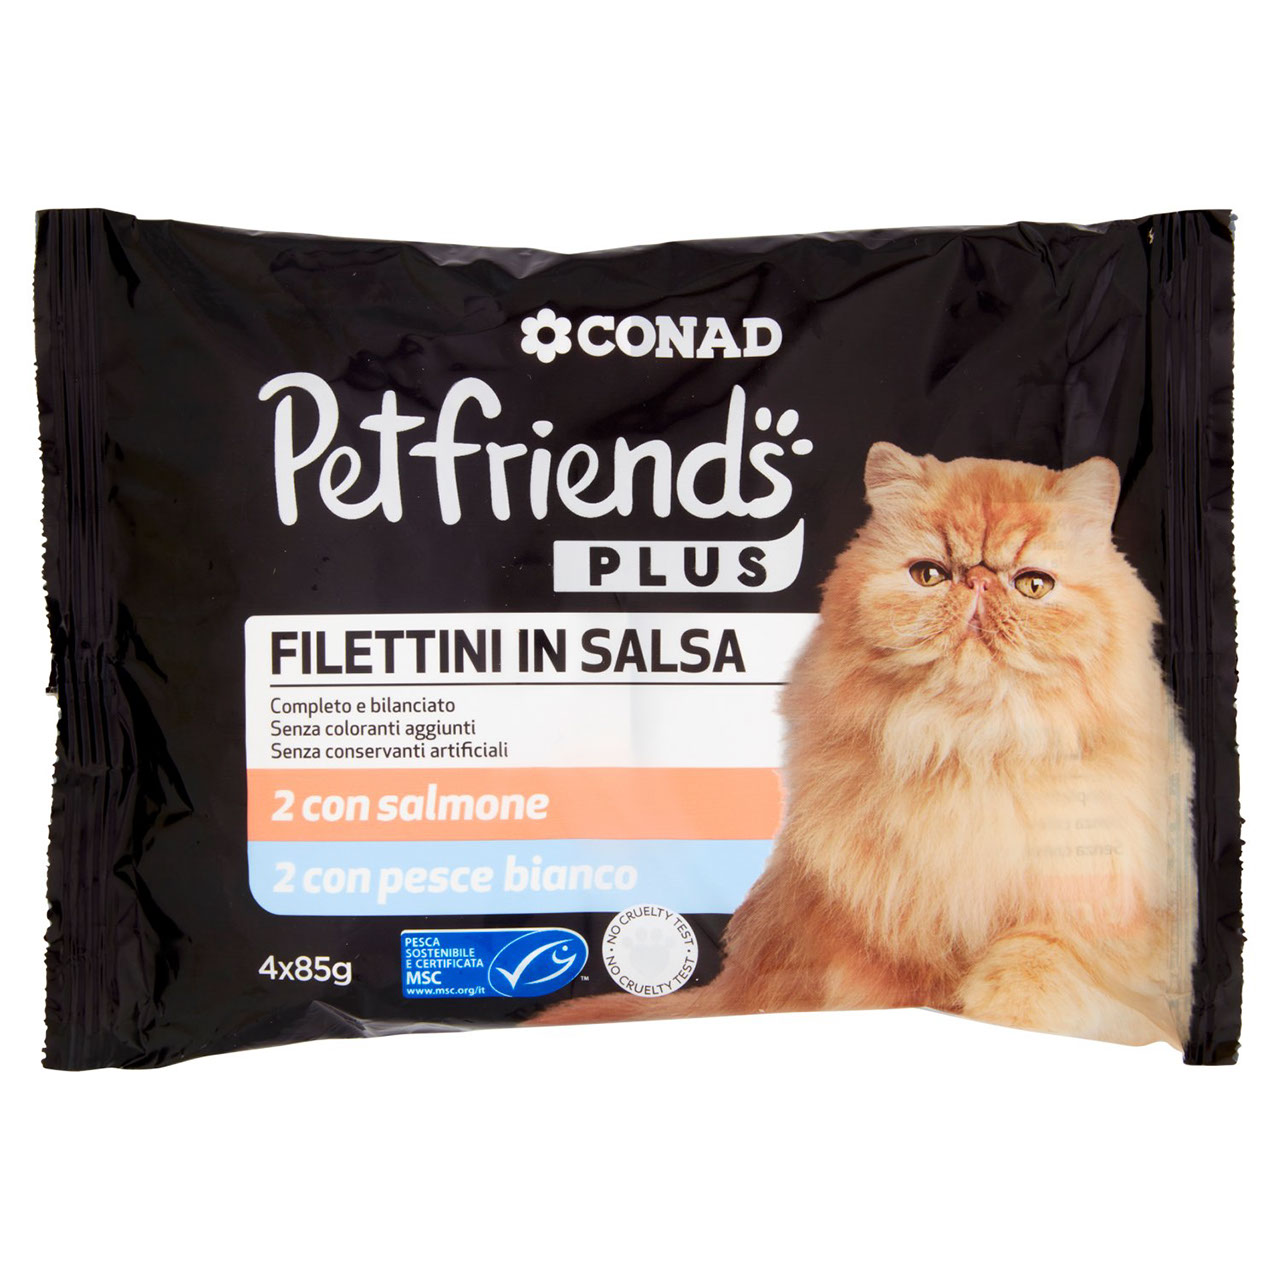 Petfriends Plus Filettini in salsa Salmone e Pesce